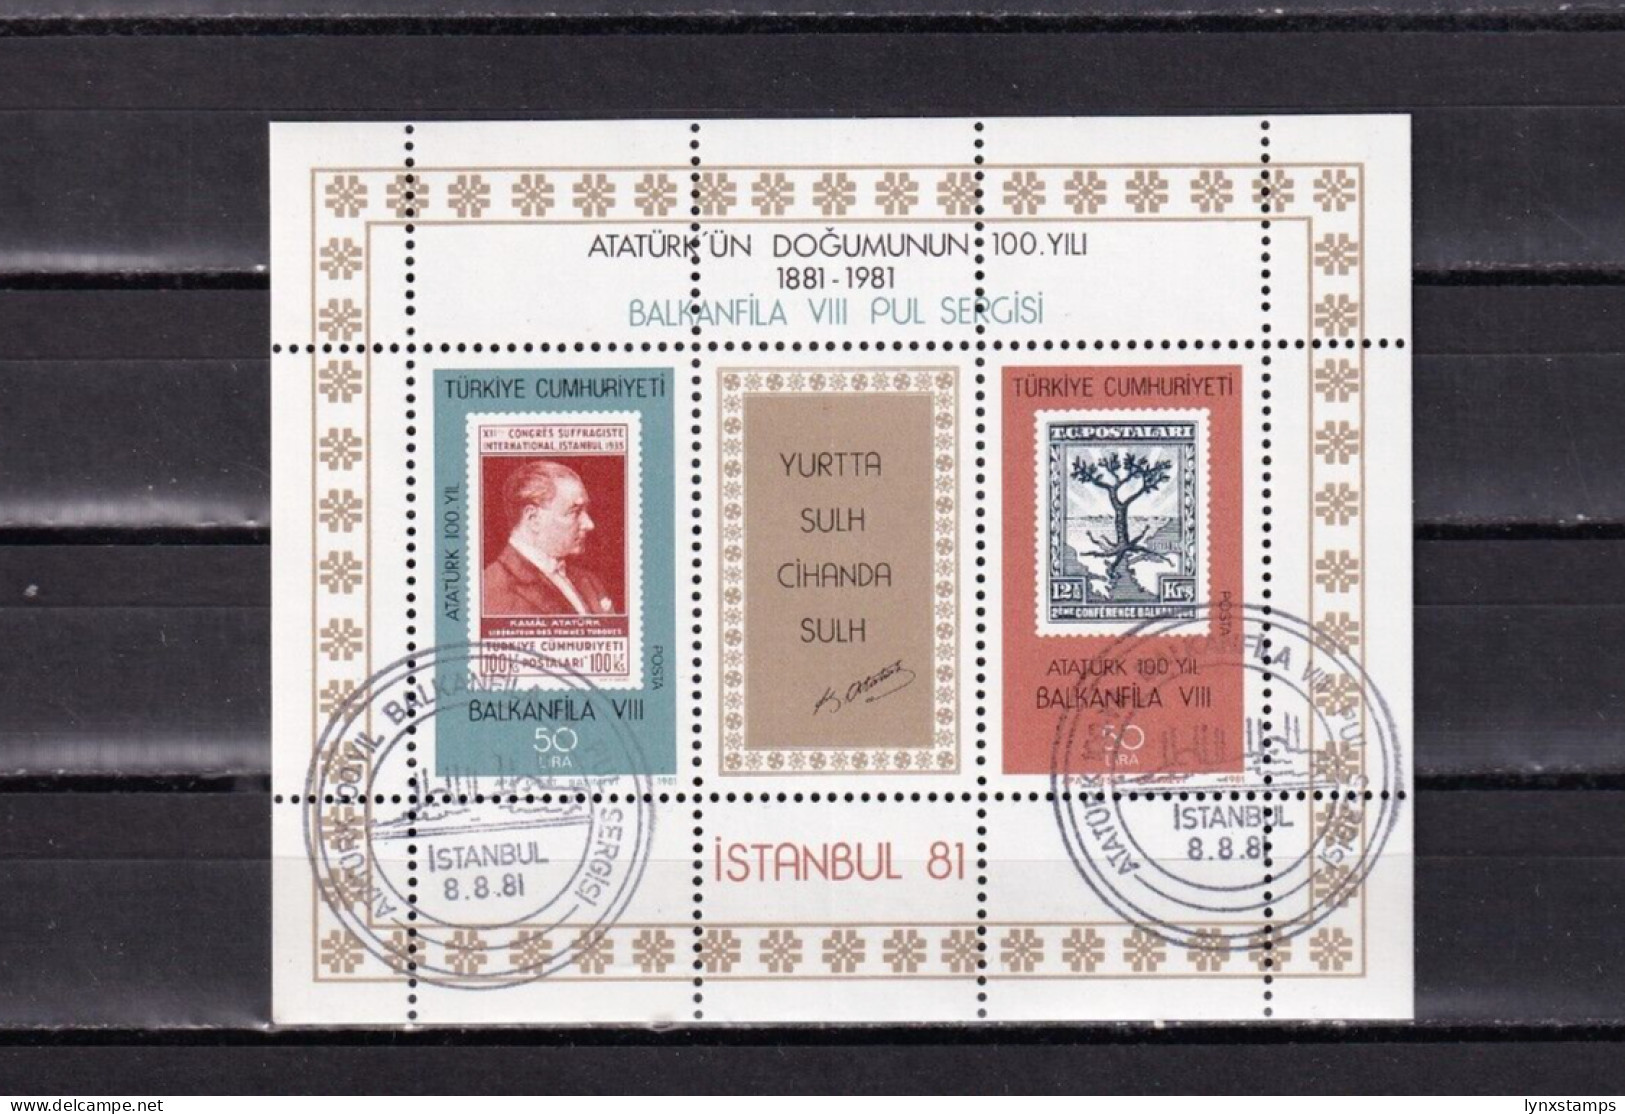 SA03 Turkey 1981 Balkanfila VIII Stamp Exhibition, Ankara Minisheet Used - Usados